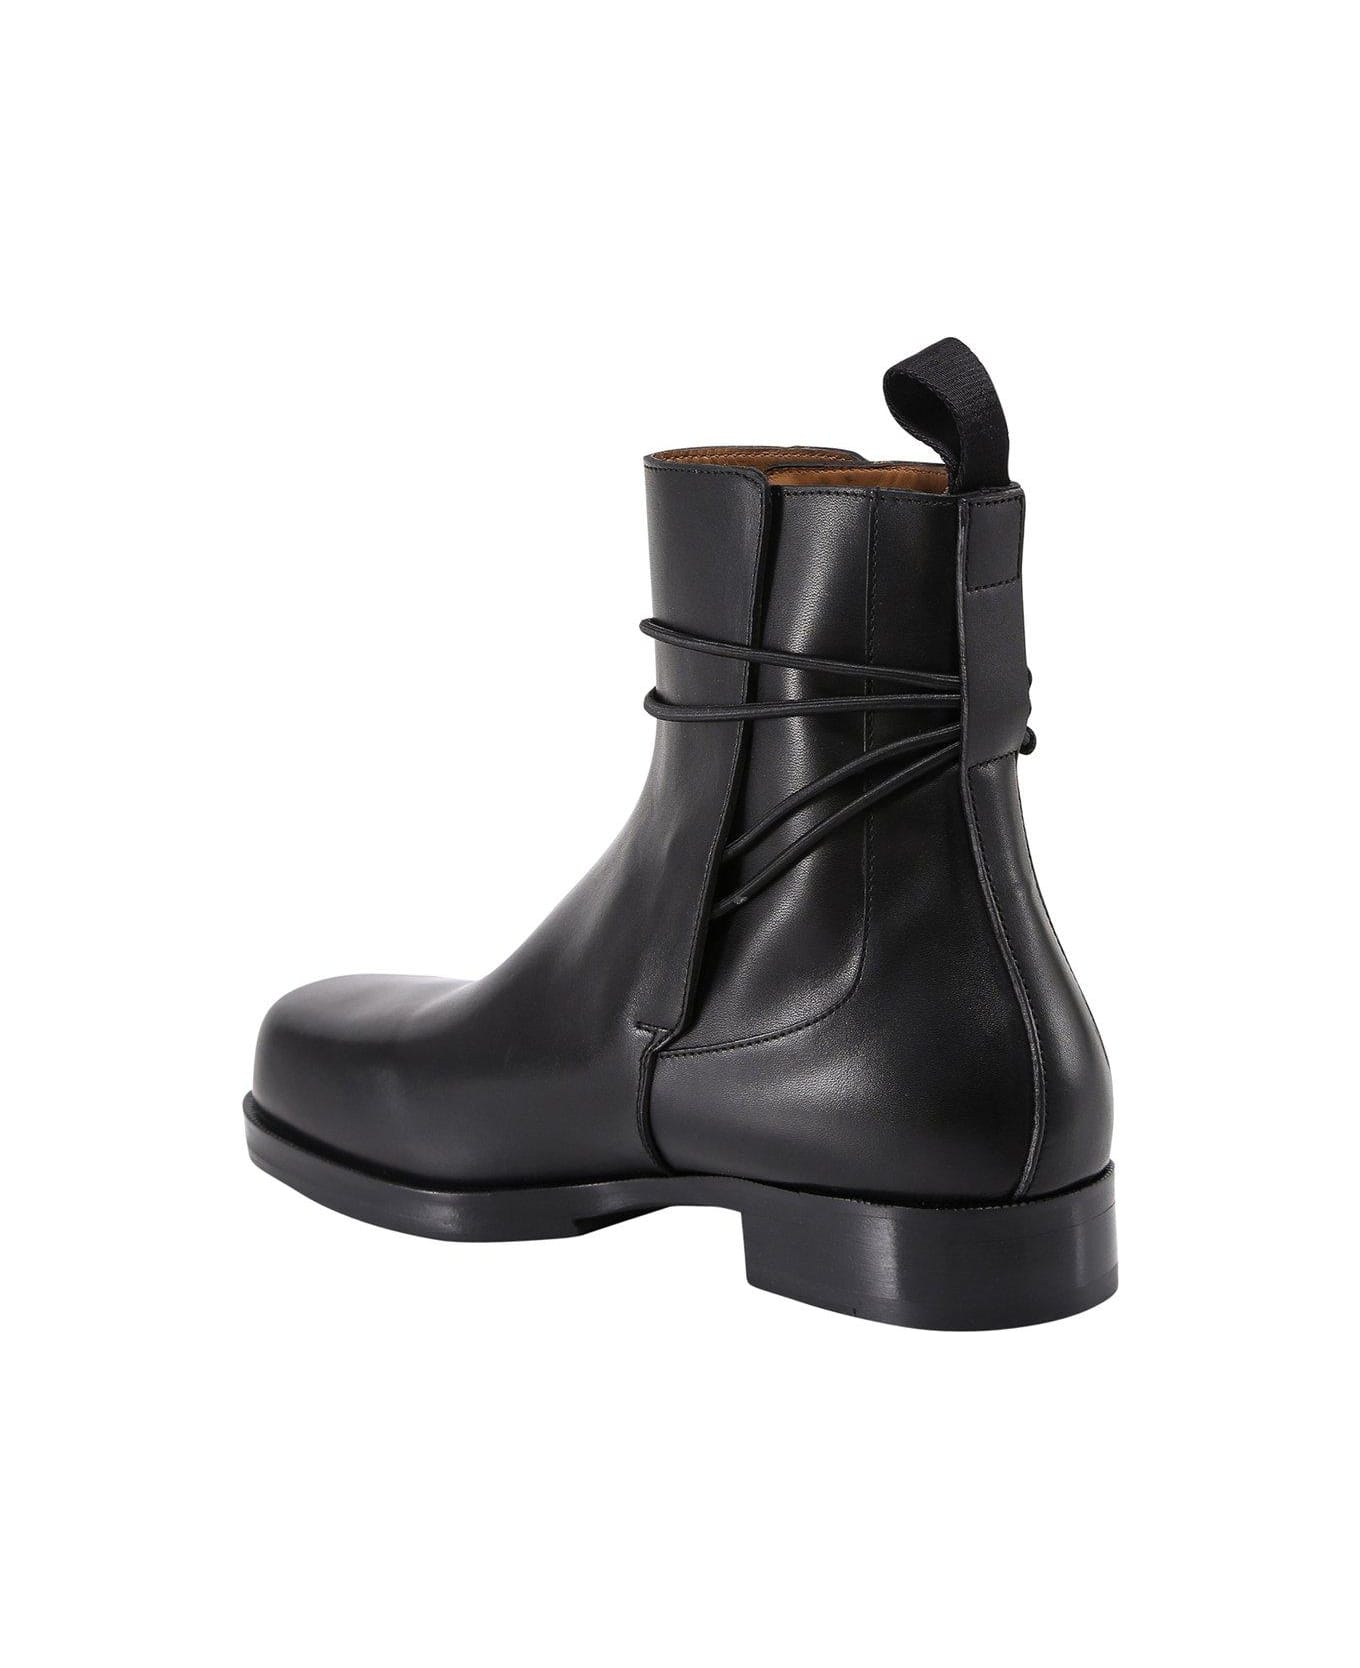 1017 ALYX 9SM Vibram Sole Chelsea Boots - Black